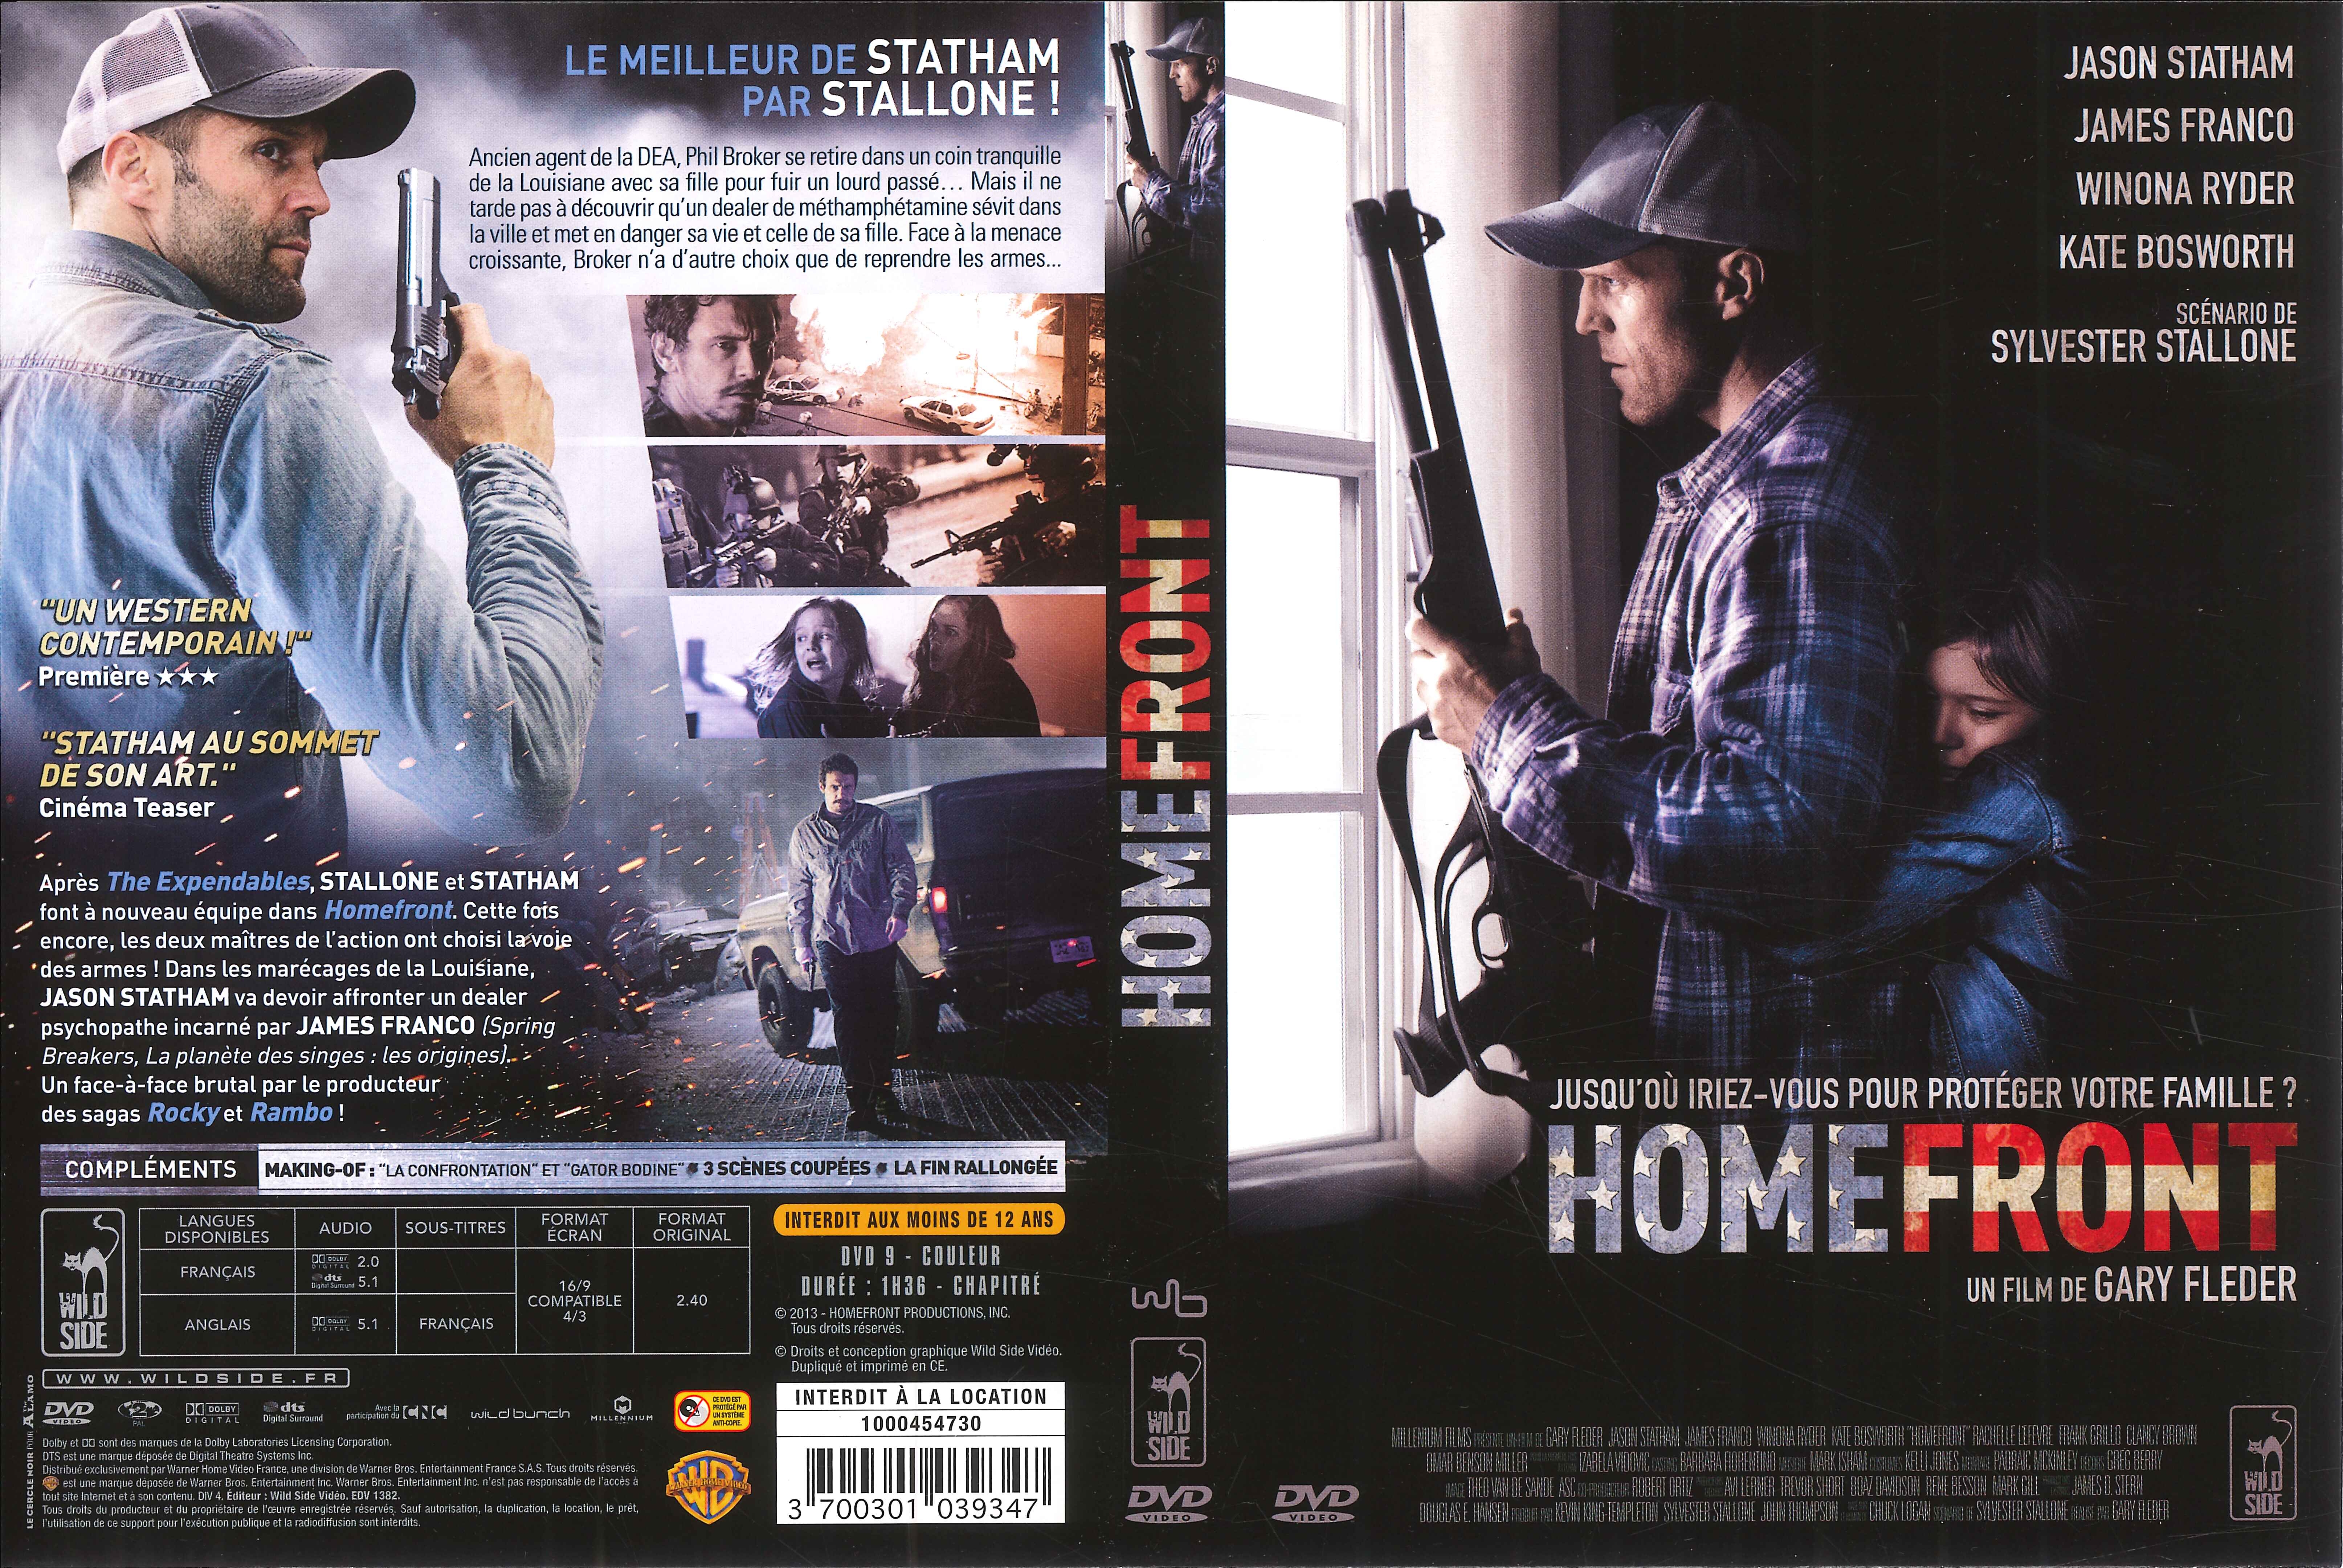 Jaquette DVD Homefront